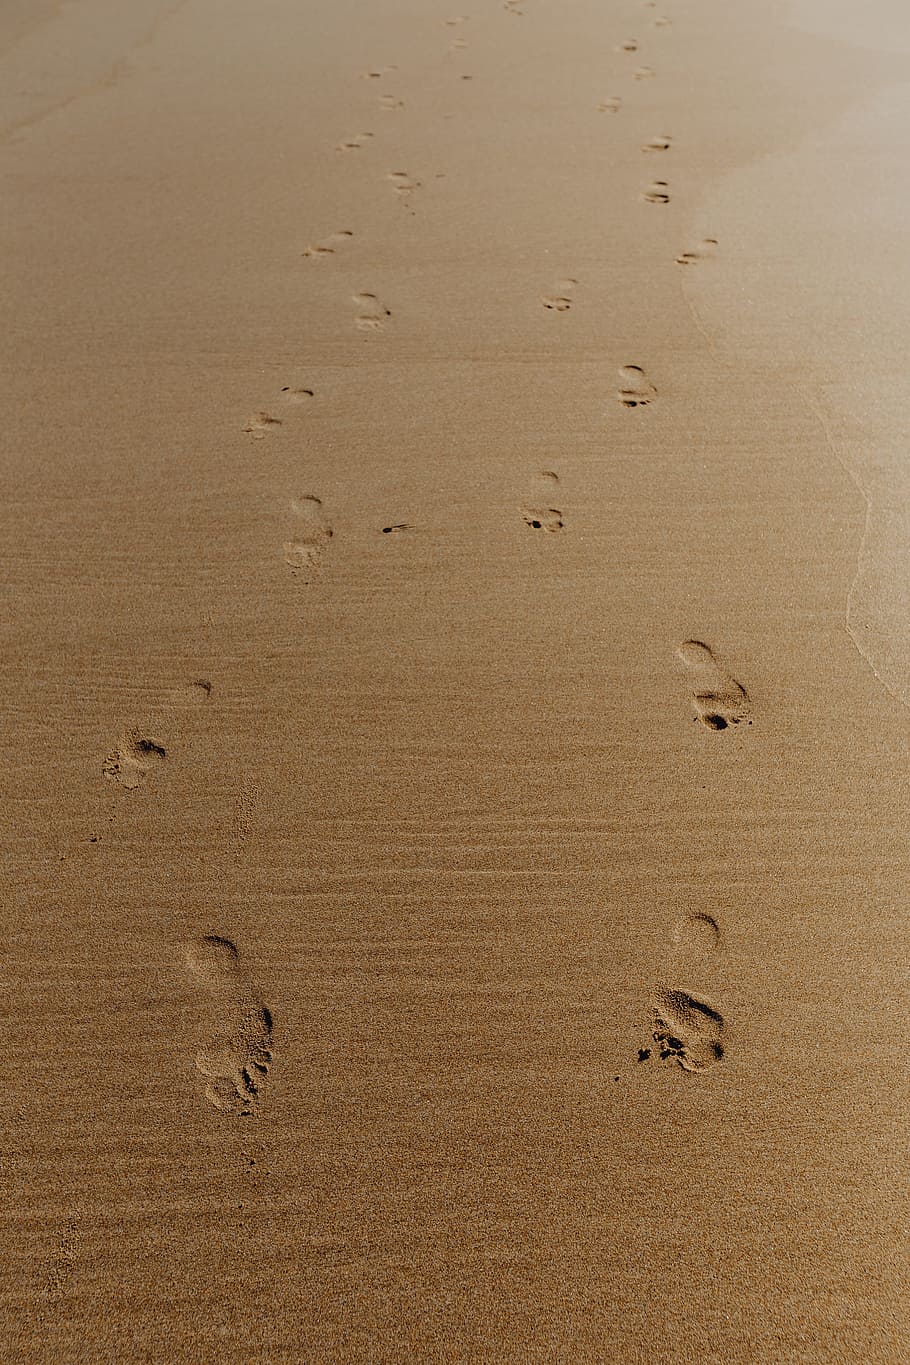 Footprints on a sandy beach, Portugal, ocean, sea, shore, summer